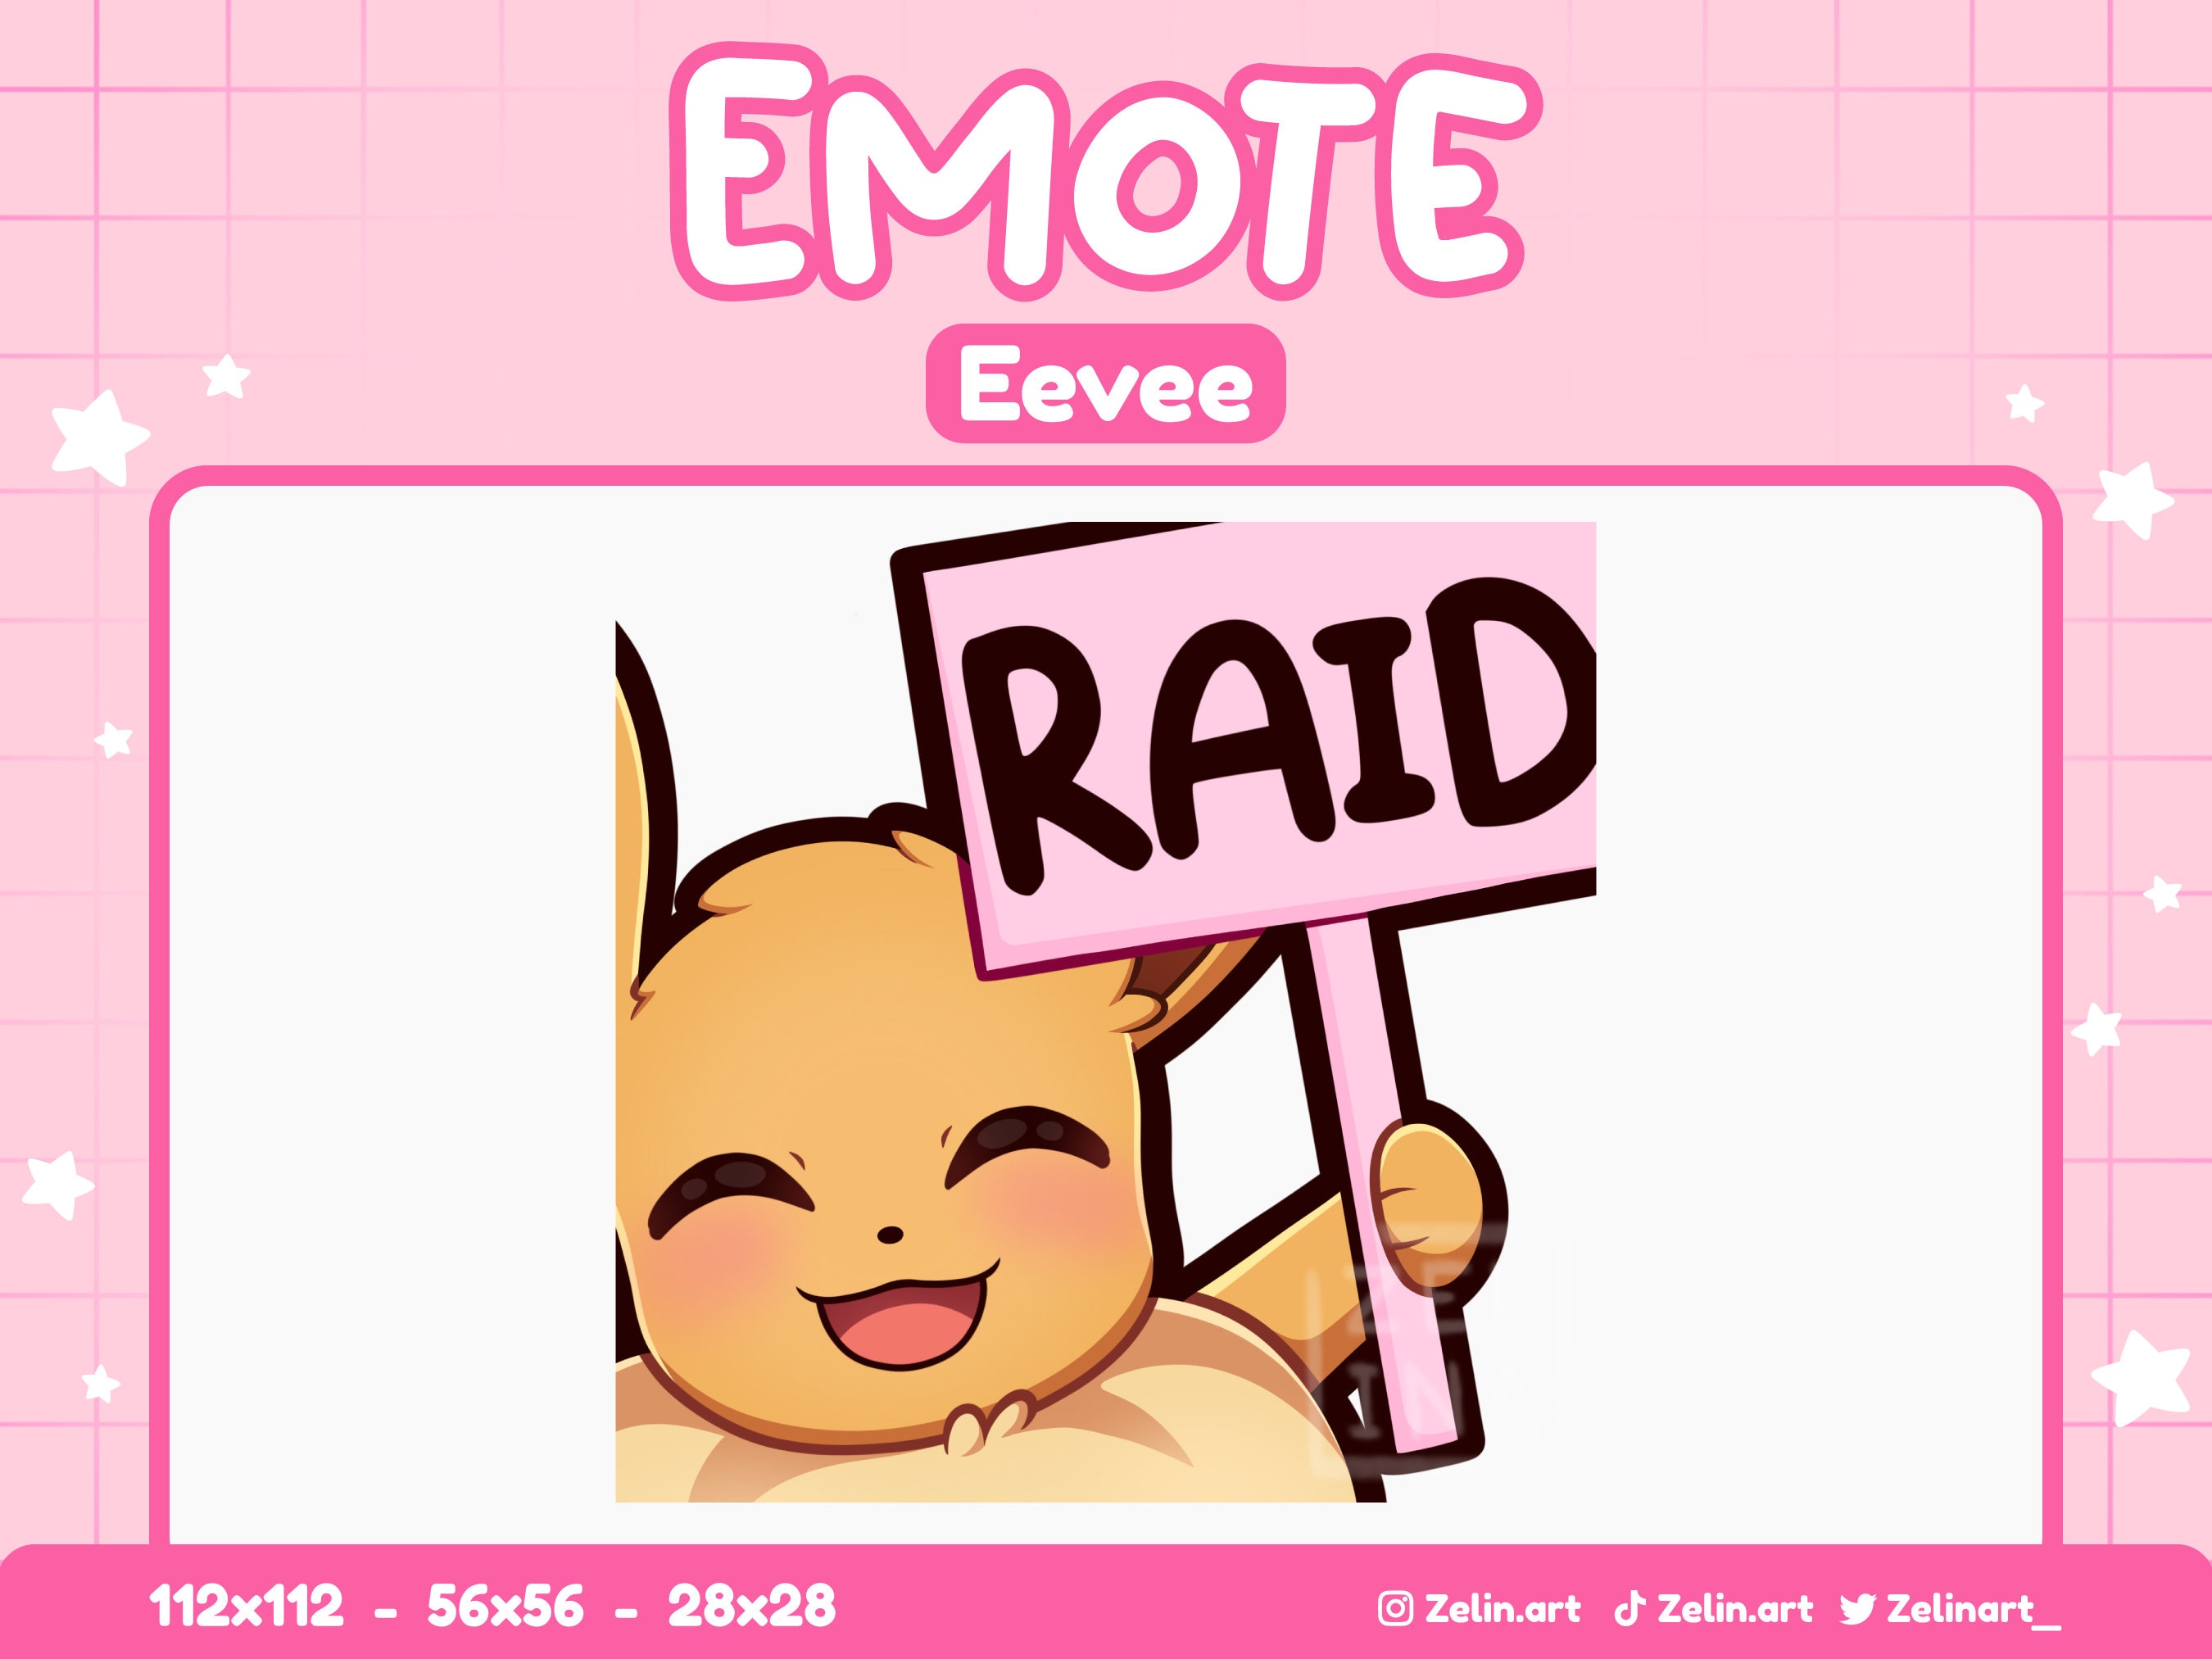 Clip Art Royalty Free Download Chad Discord Emoji Use - Chad Meme